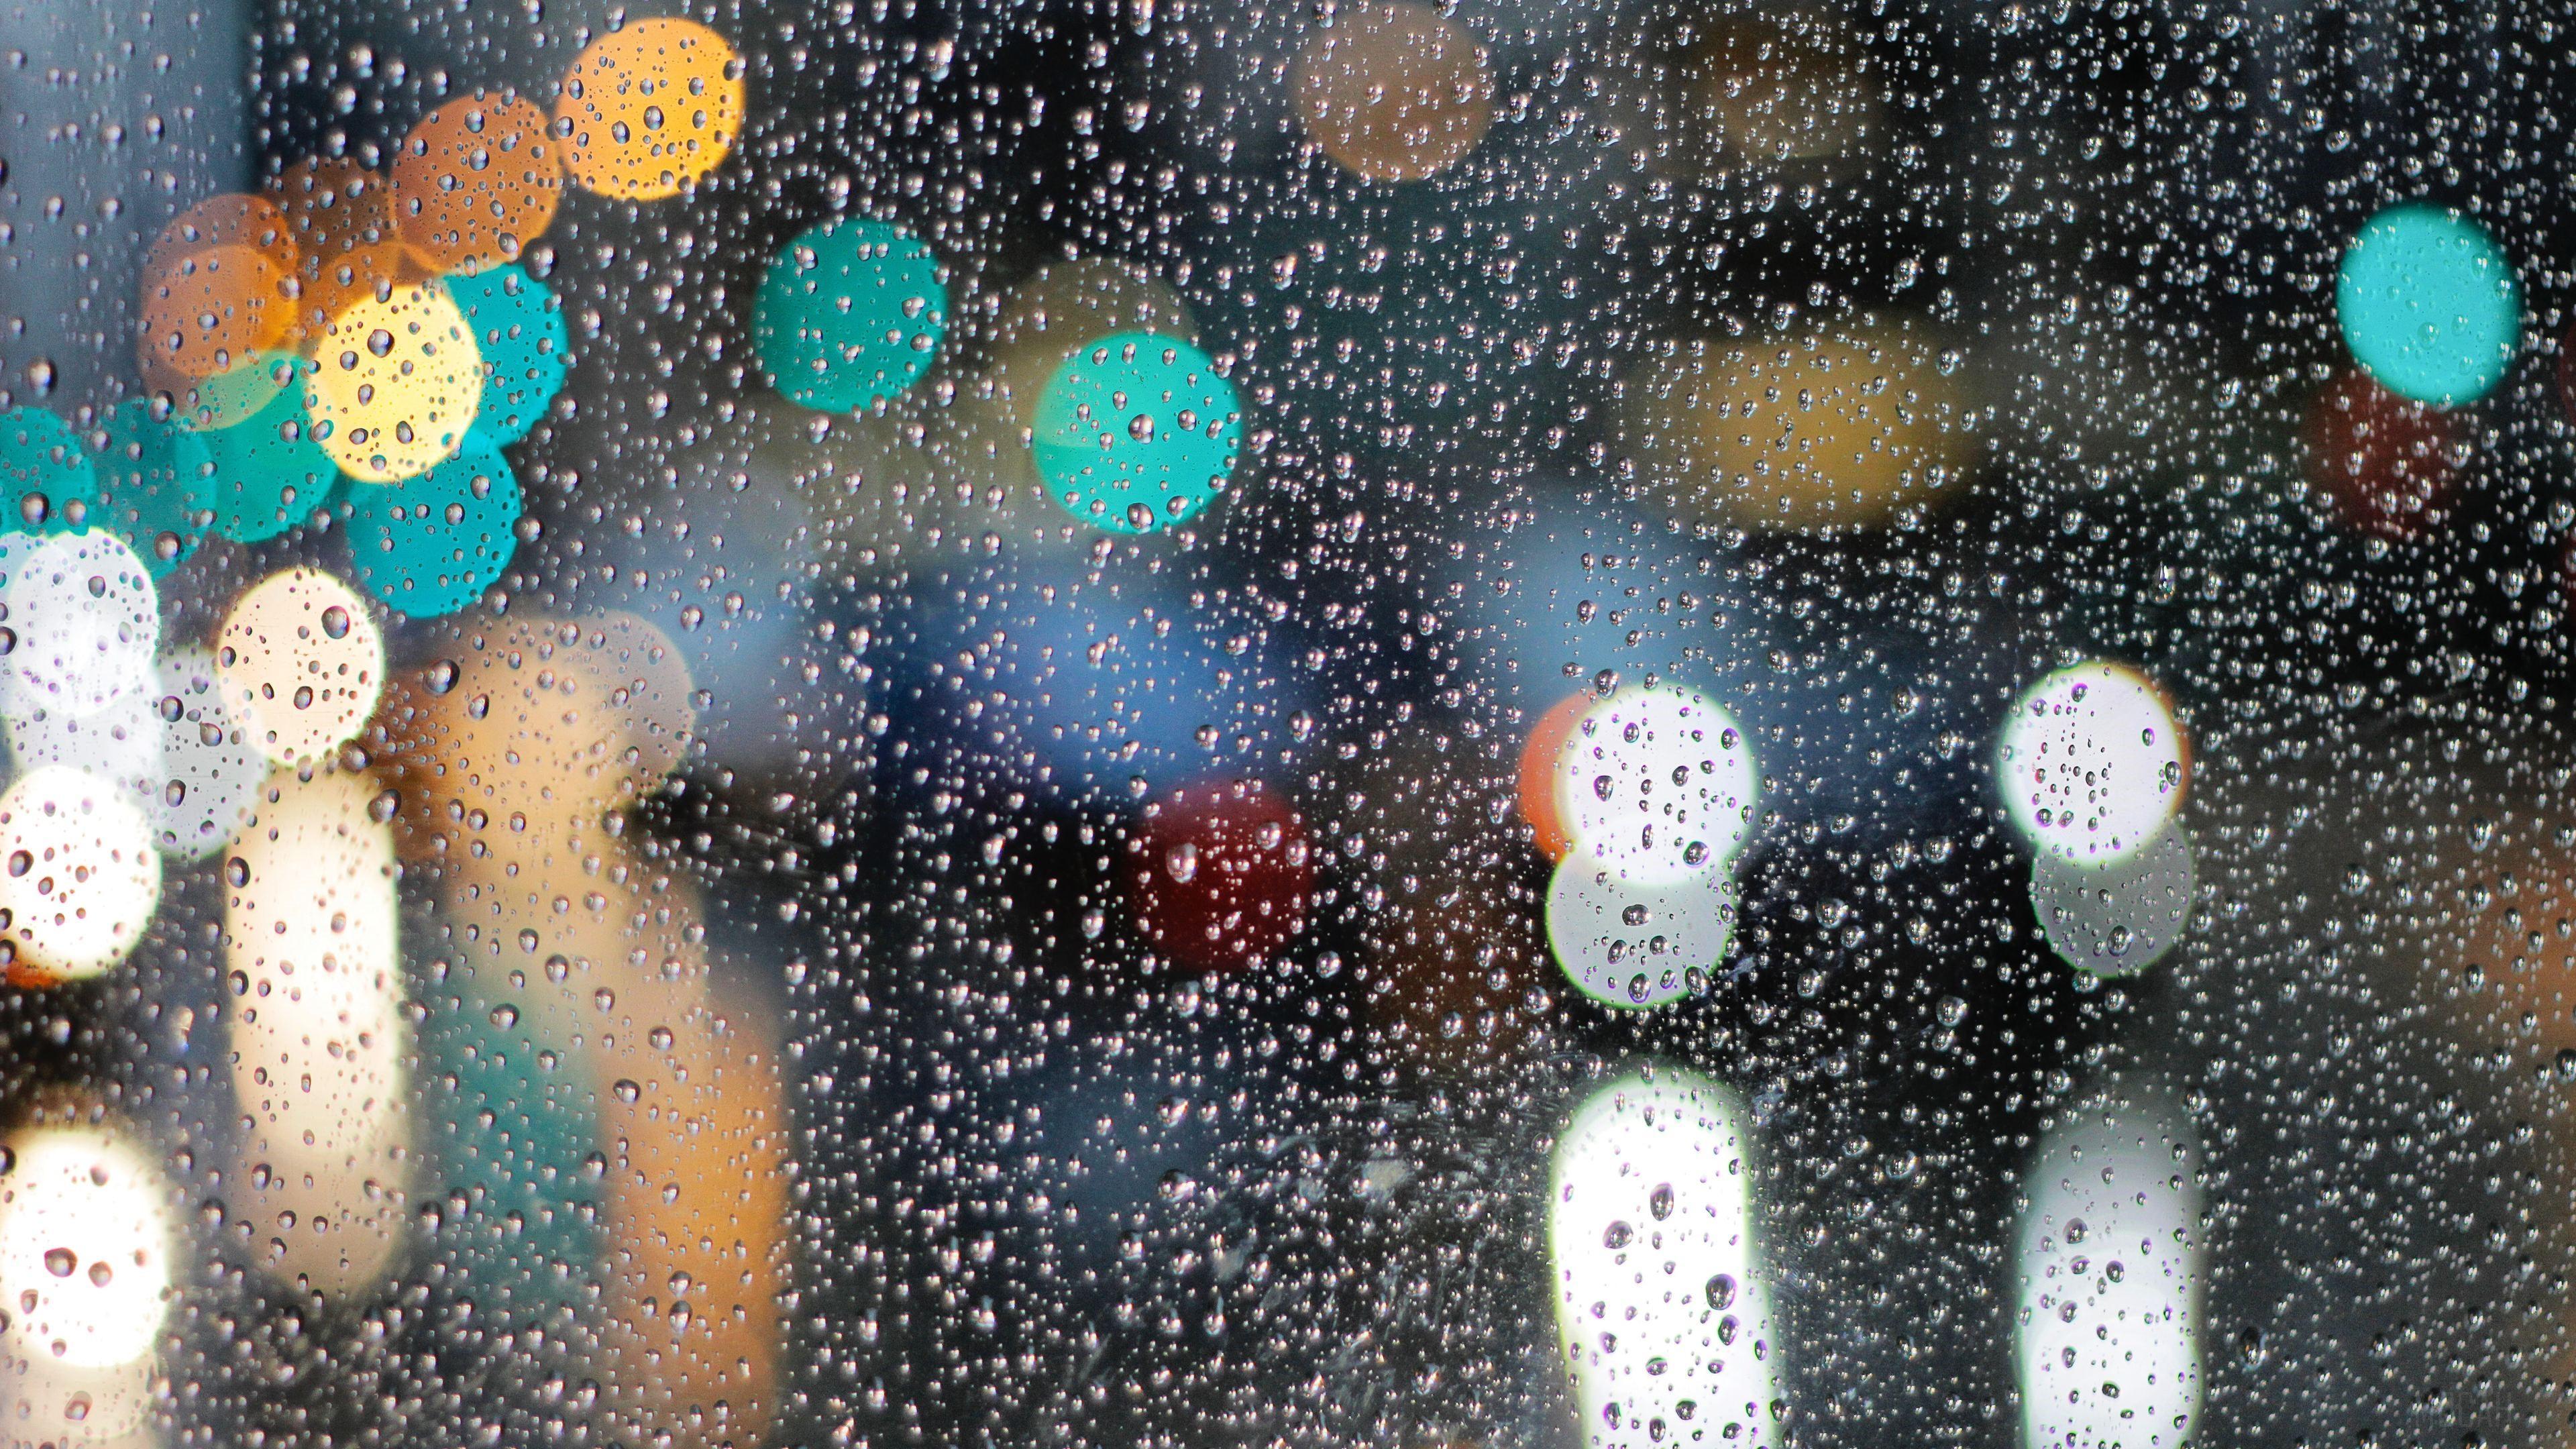 HD wallpaper, Rainy Day Drops On Glass Lights Bokeh 4K